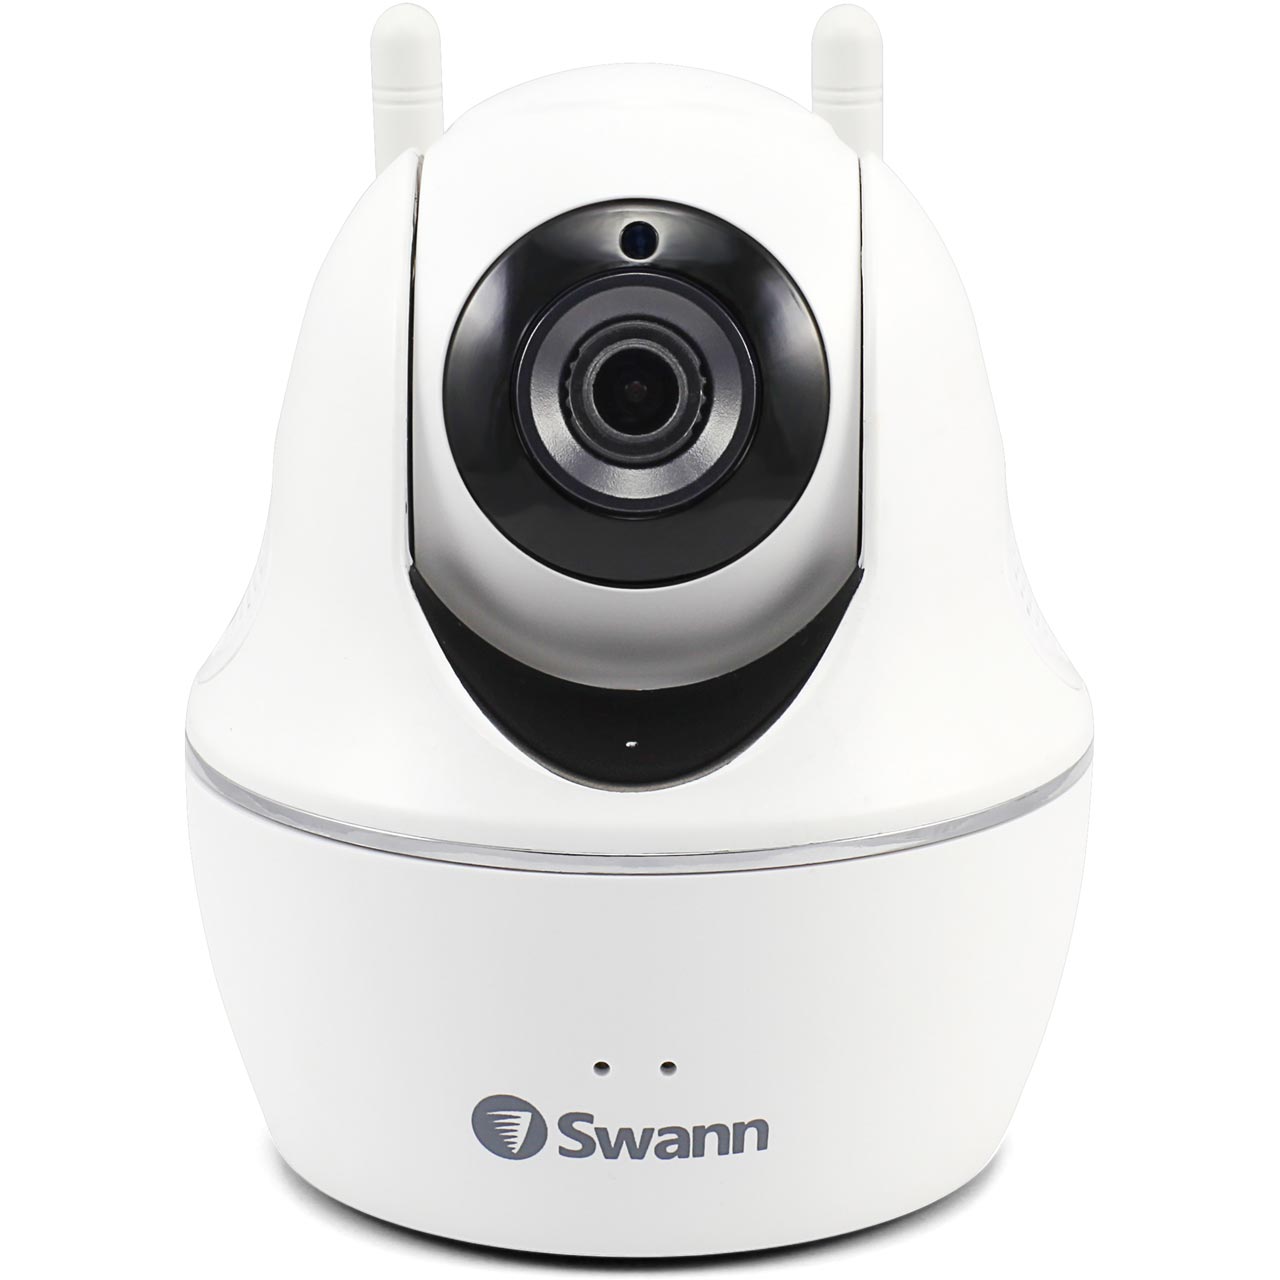 Swann Pan & Tilt Smart Security Camera Full HD 1080p Review